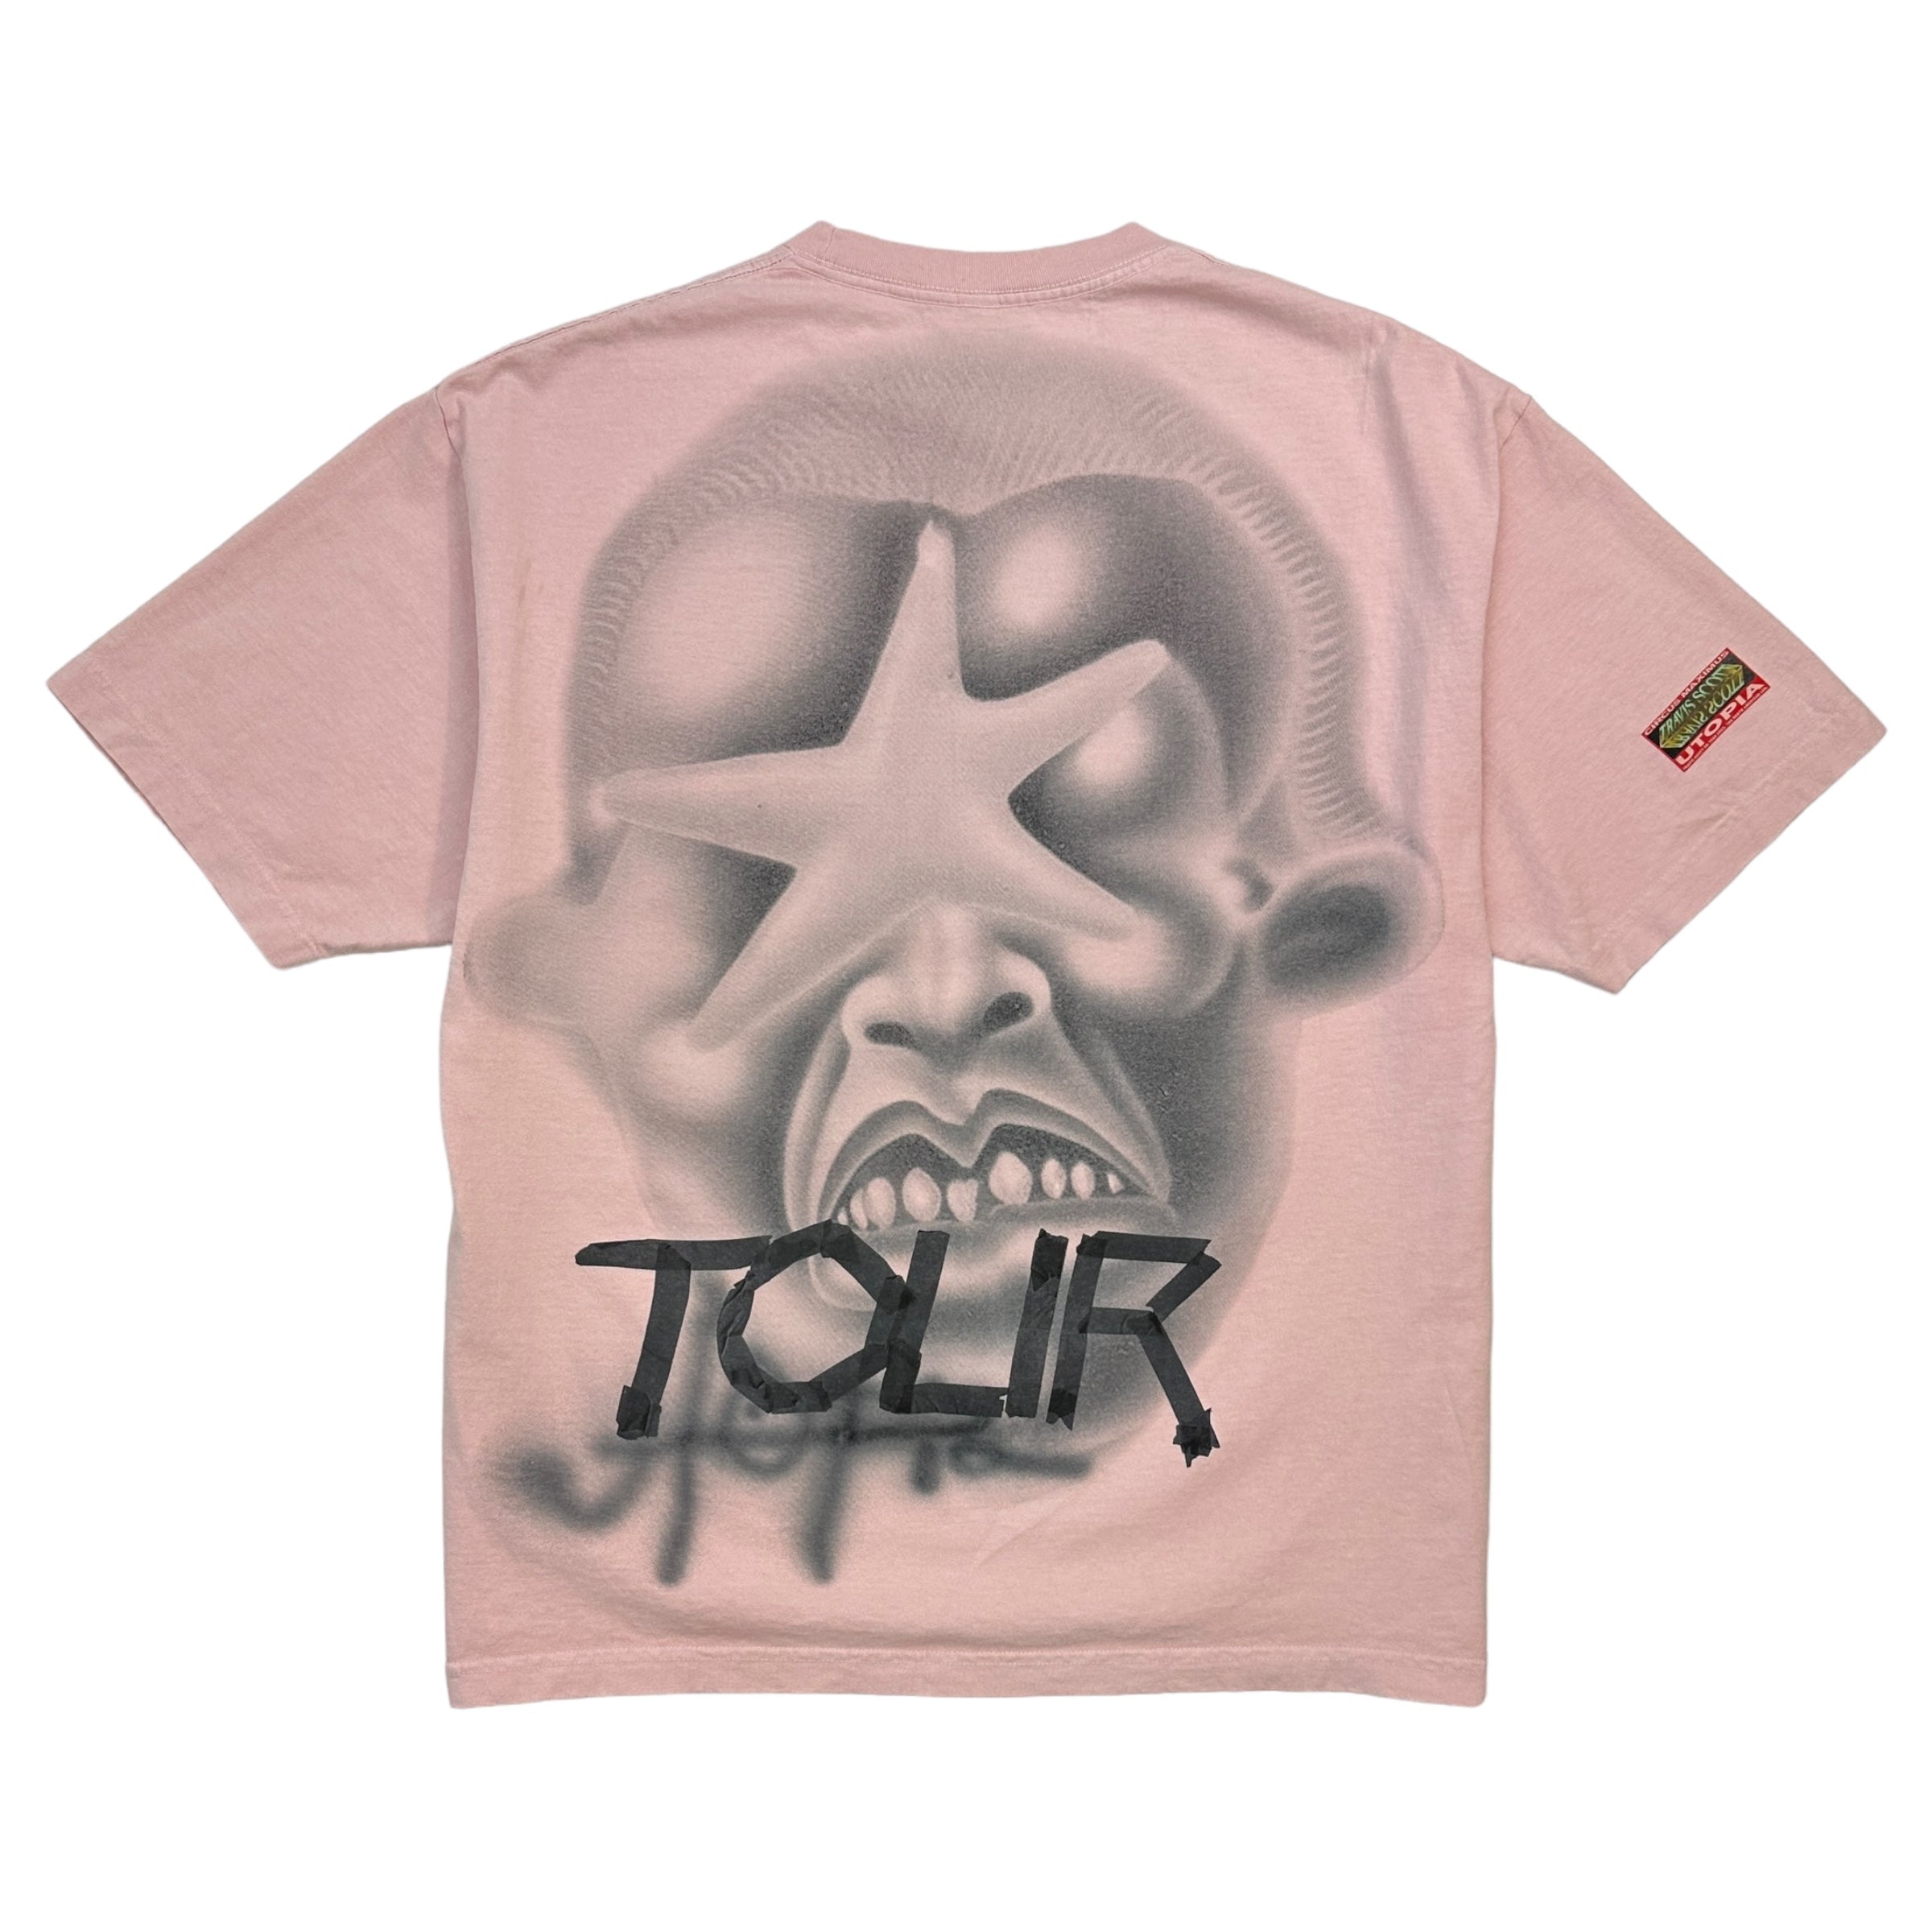 Travis Scott Utopia Front Row Seats T-Shirt Faded Pink